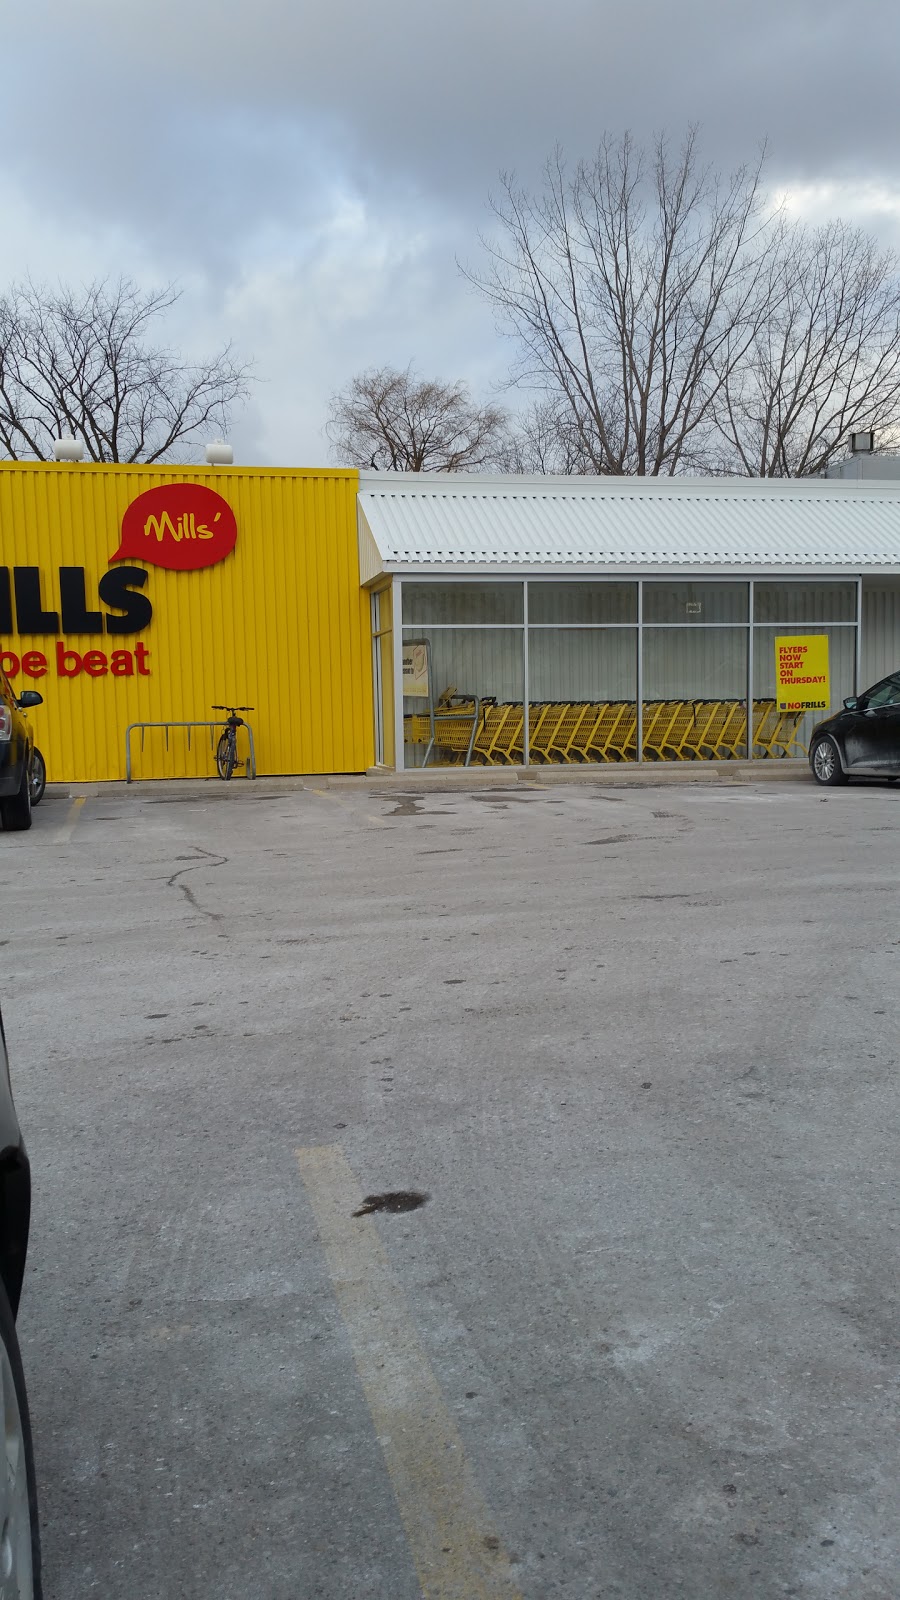 Mills No Frills | bakery | 275 Main St, Glencoe, ON N0L 1M0, Canada | 8669876453 OR +1 866-987-6453